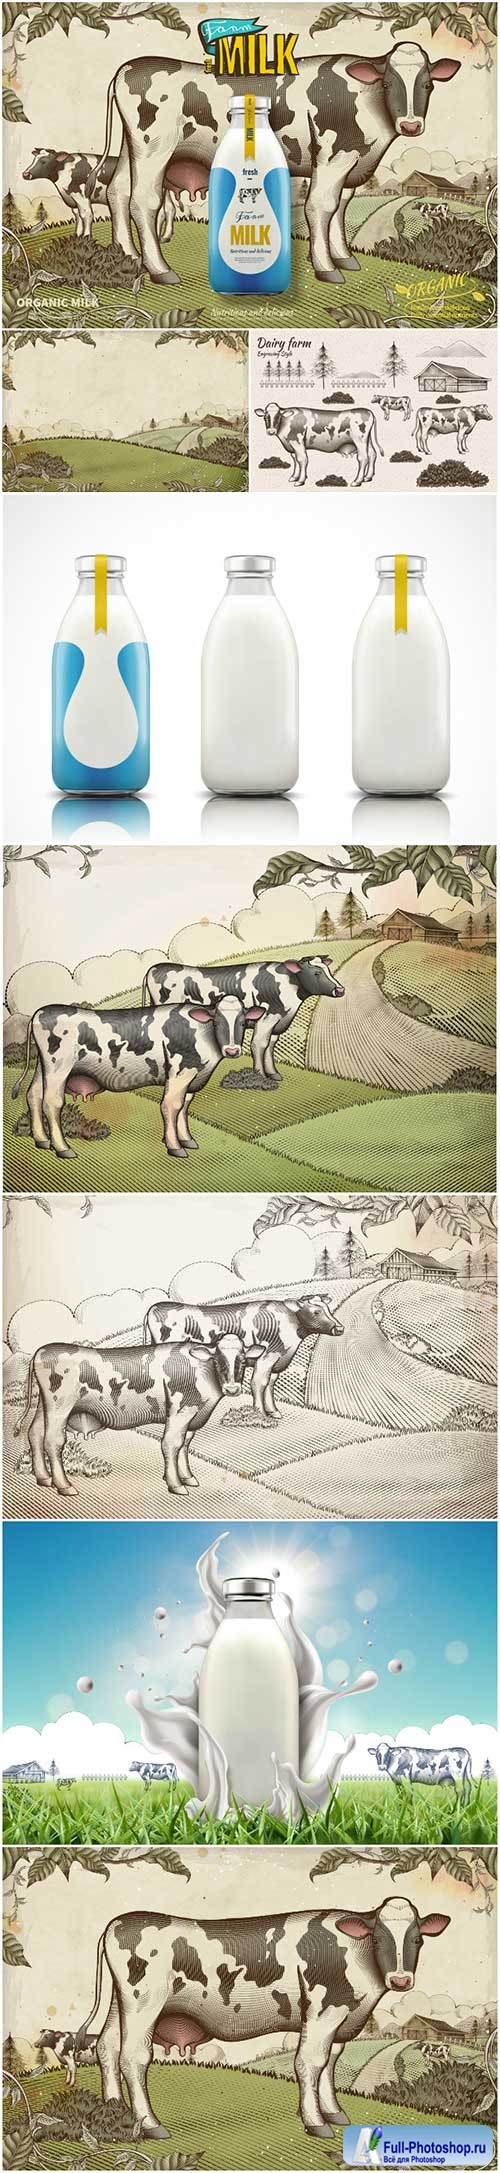 Farm fresh milk in 3d illustration on retro engraved farmland and dairy cattle background